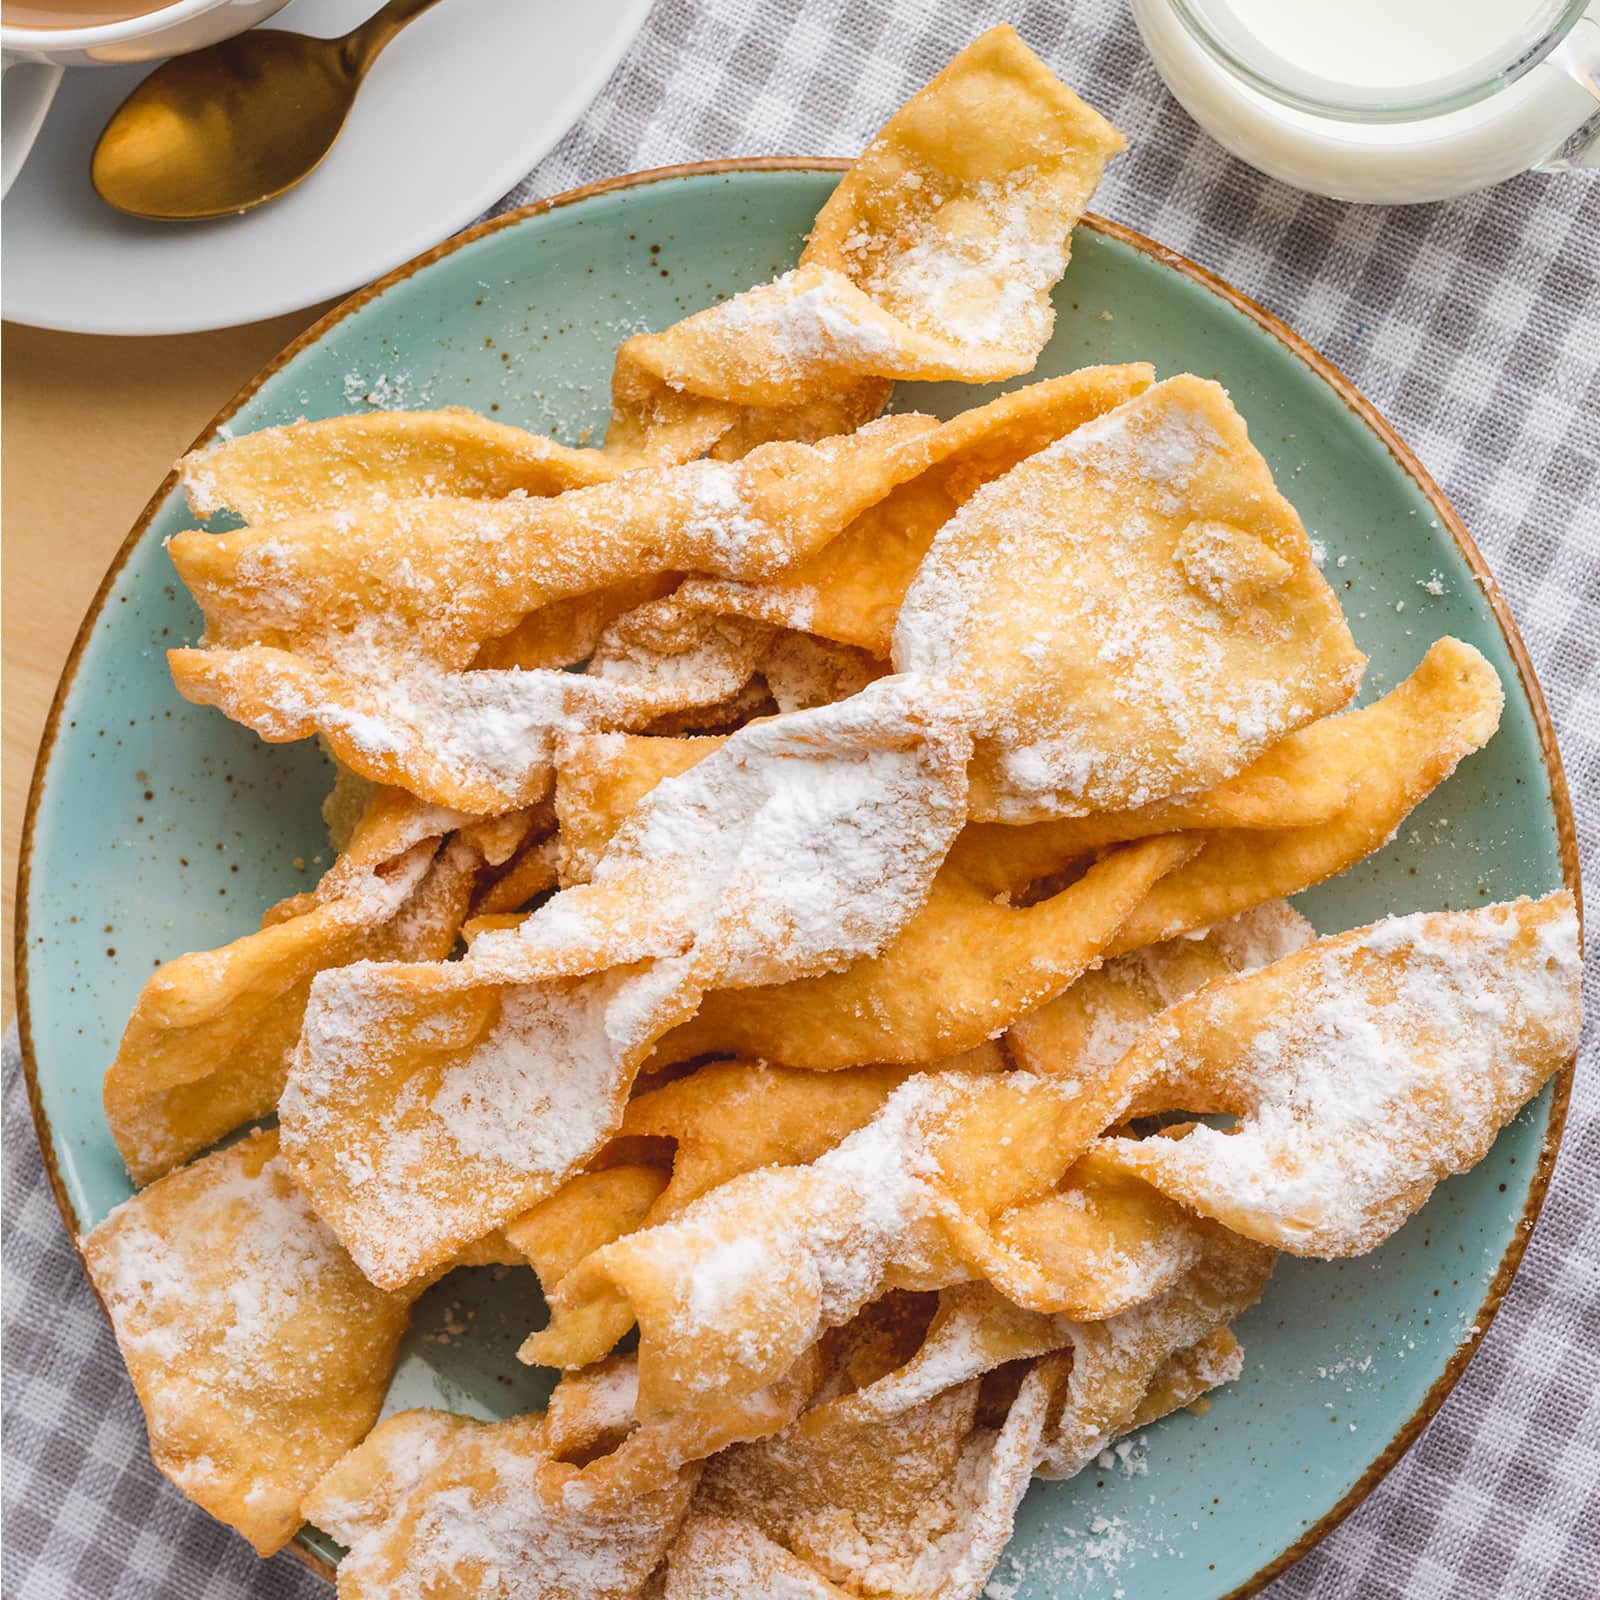 Chruściki (Faworki, Chrusty) - Polish Angel Wings Cookies, sprinkled with powdered sugar